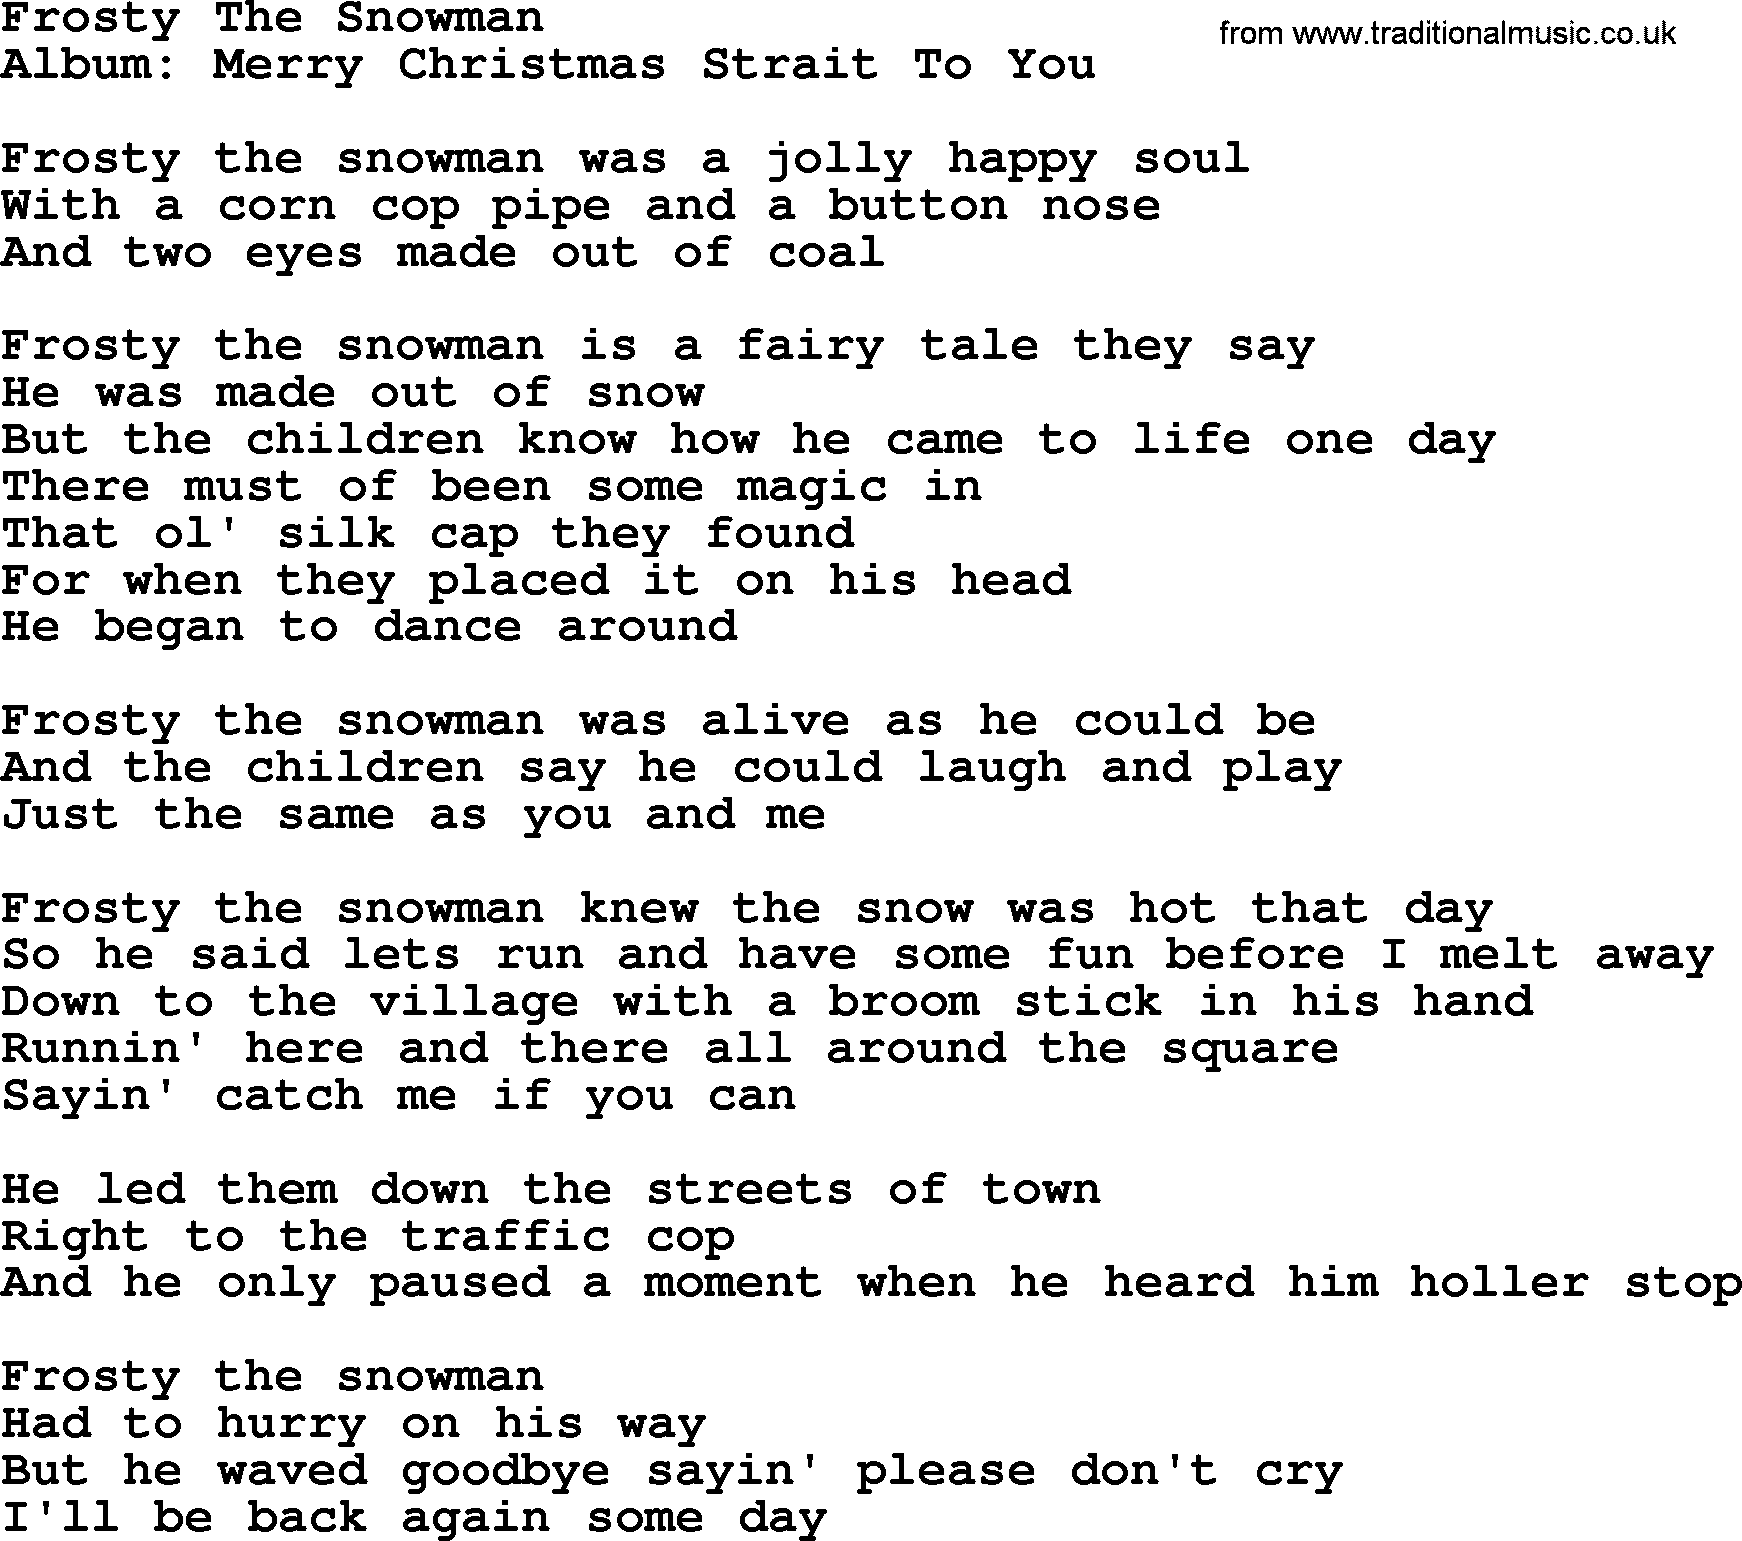 Frosty The Snowman, by Strait lyrics